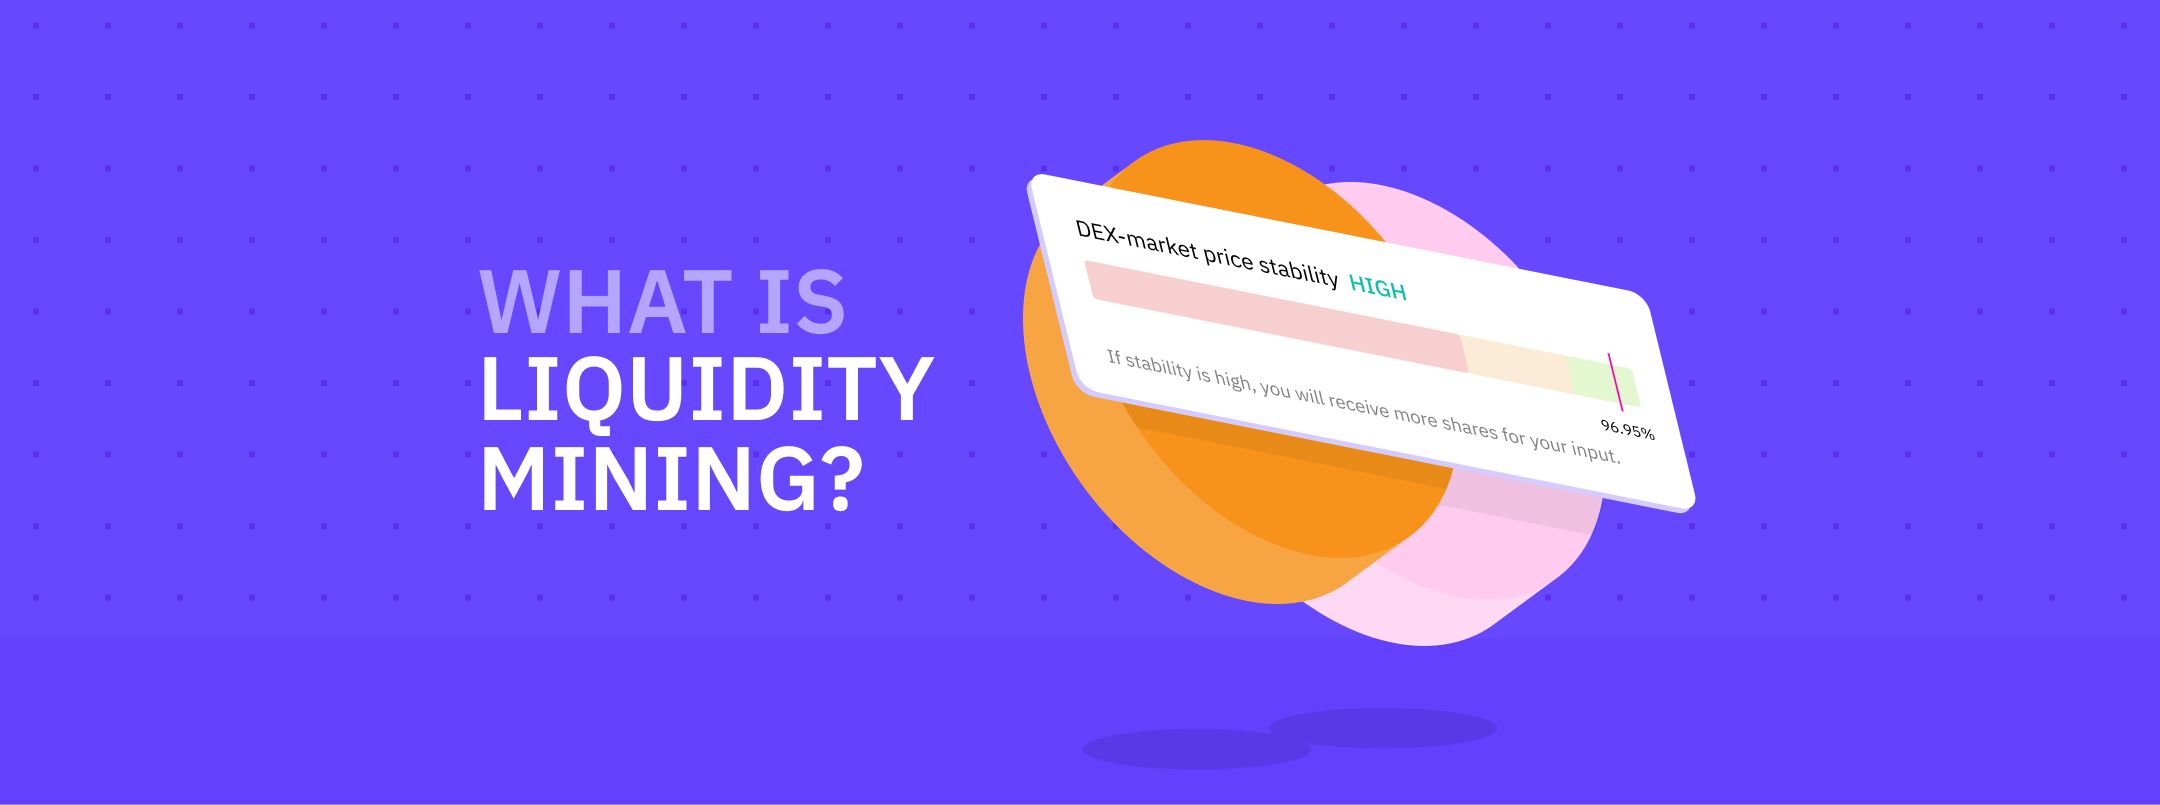 What Is Liquidity Mining?